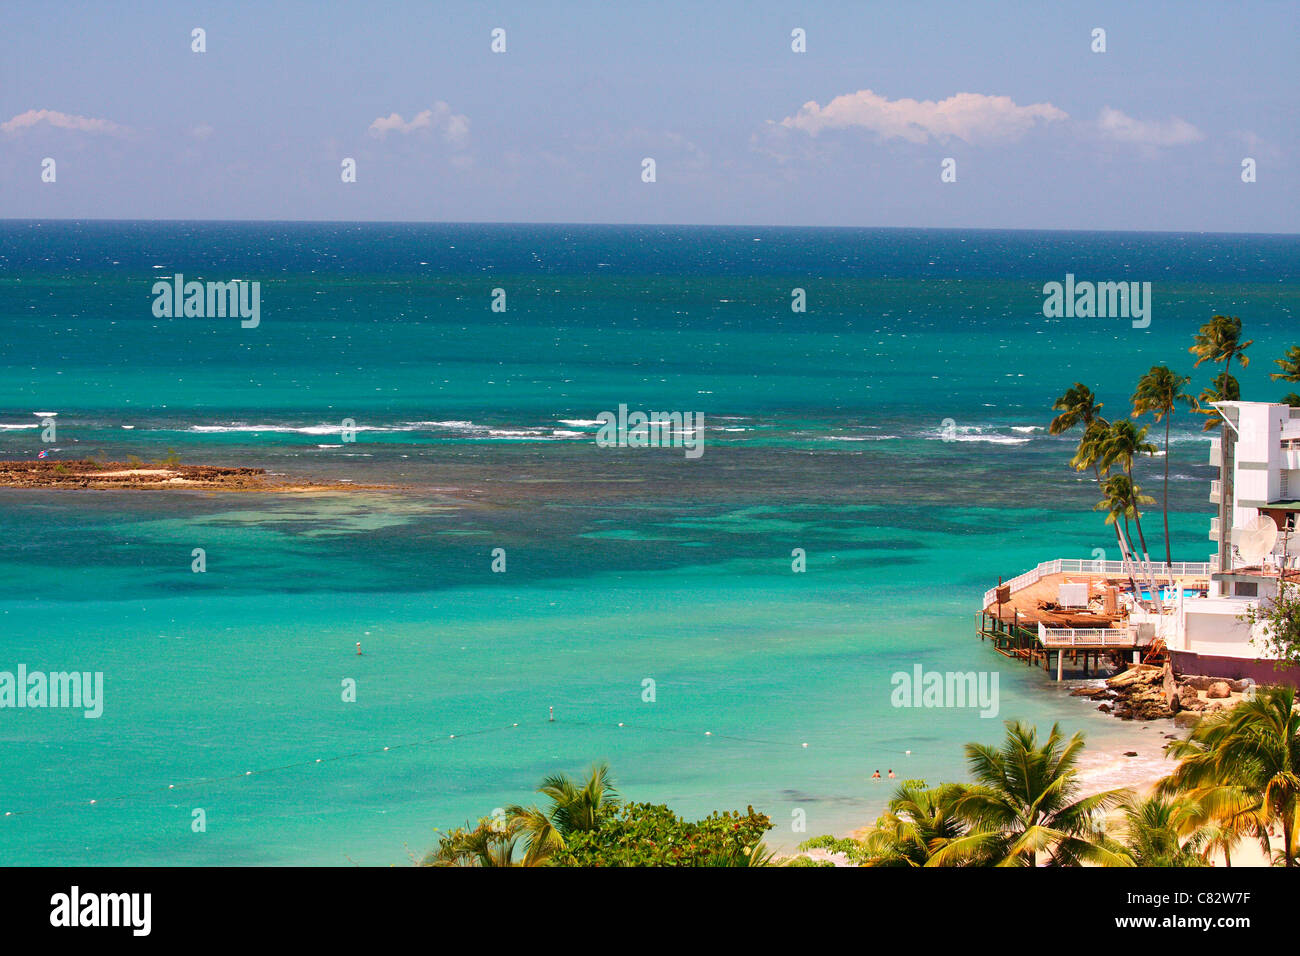 The beach of Isla Verde in San Juan, Puerto Rico. Stock Photo